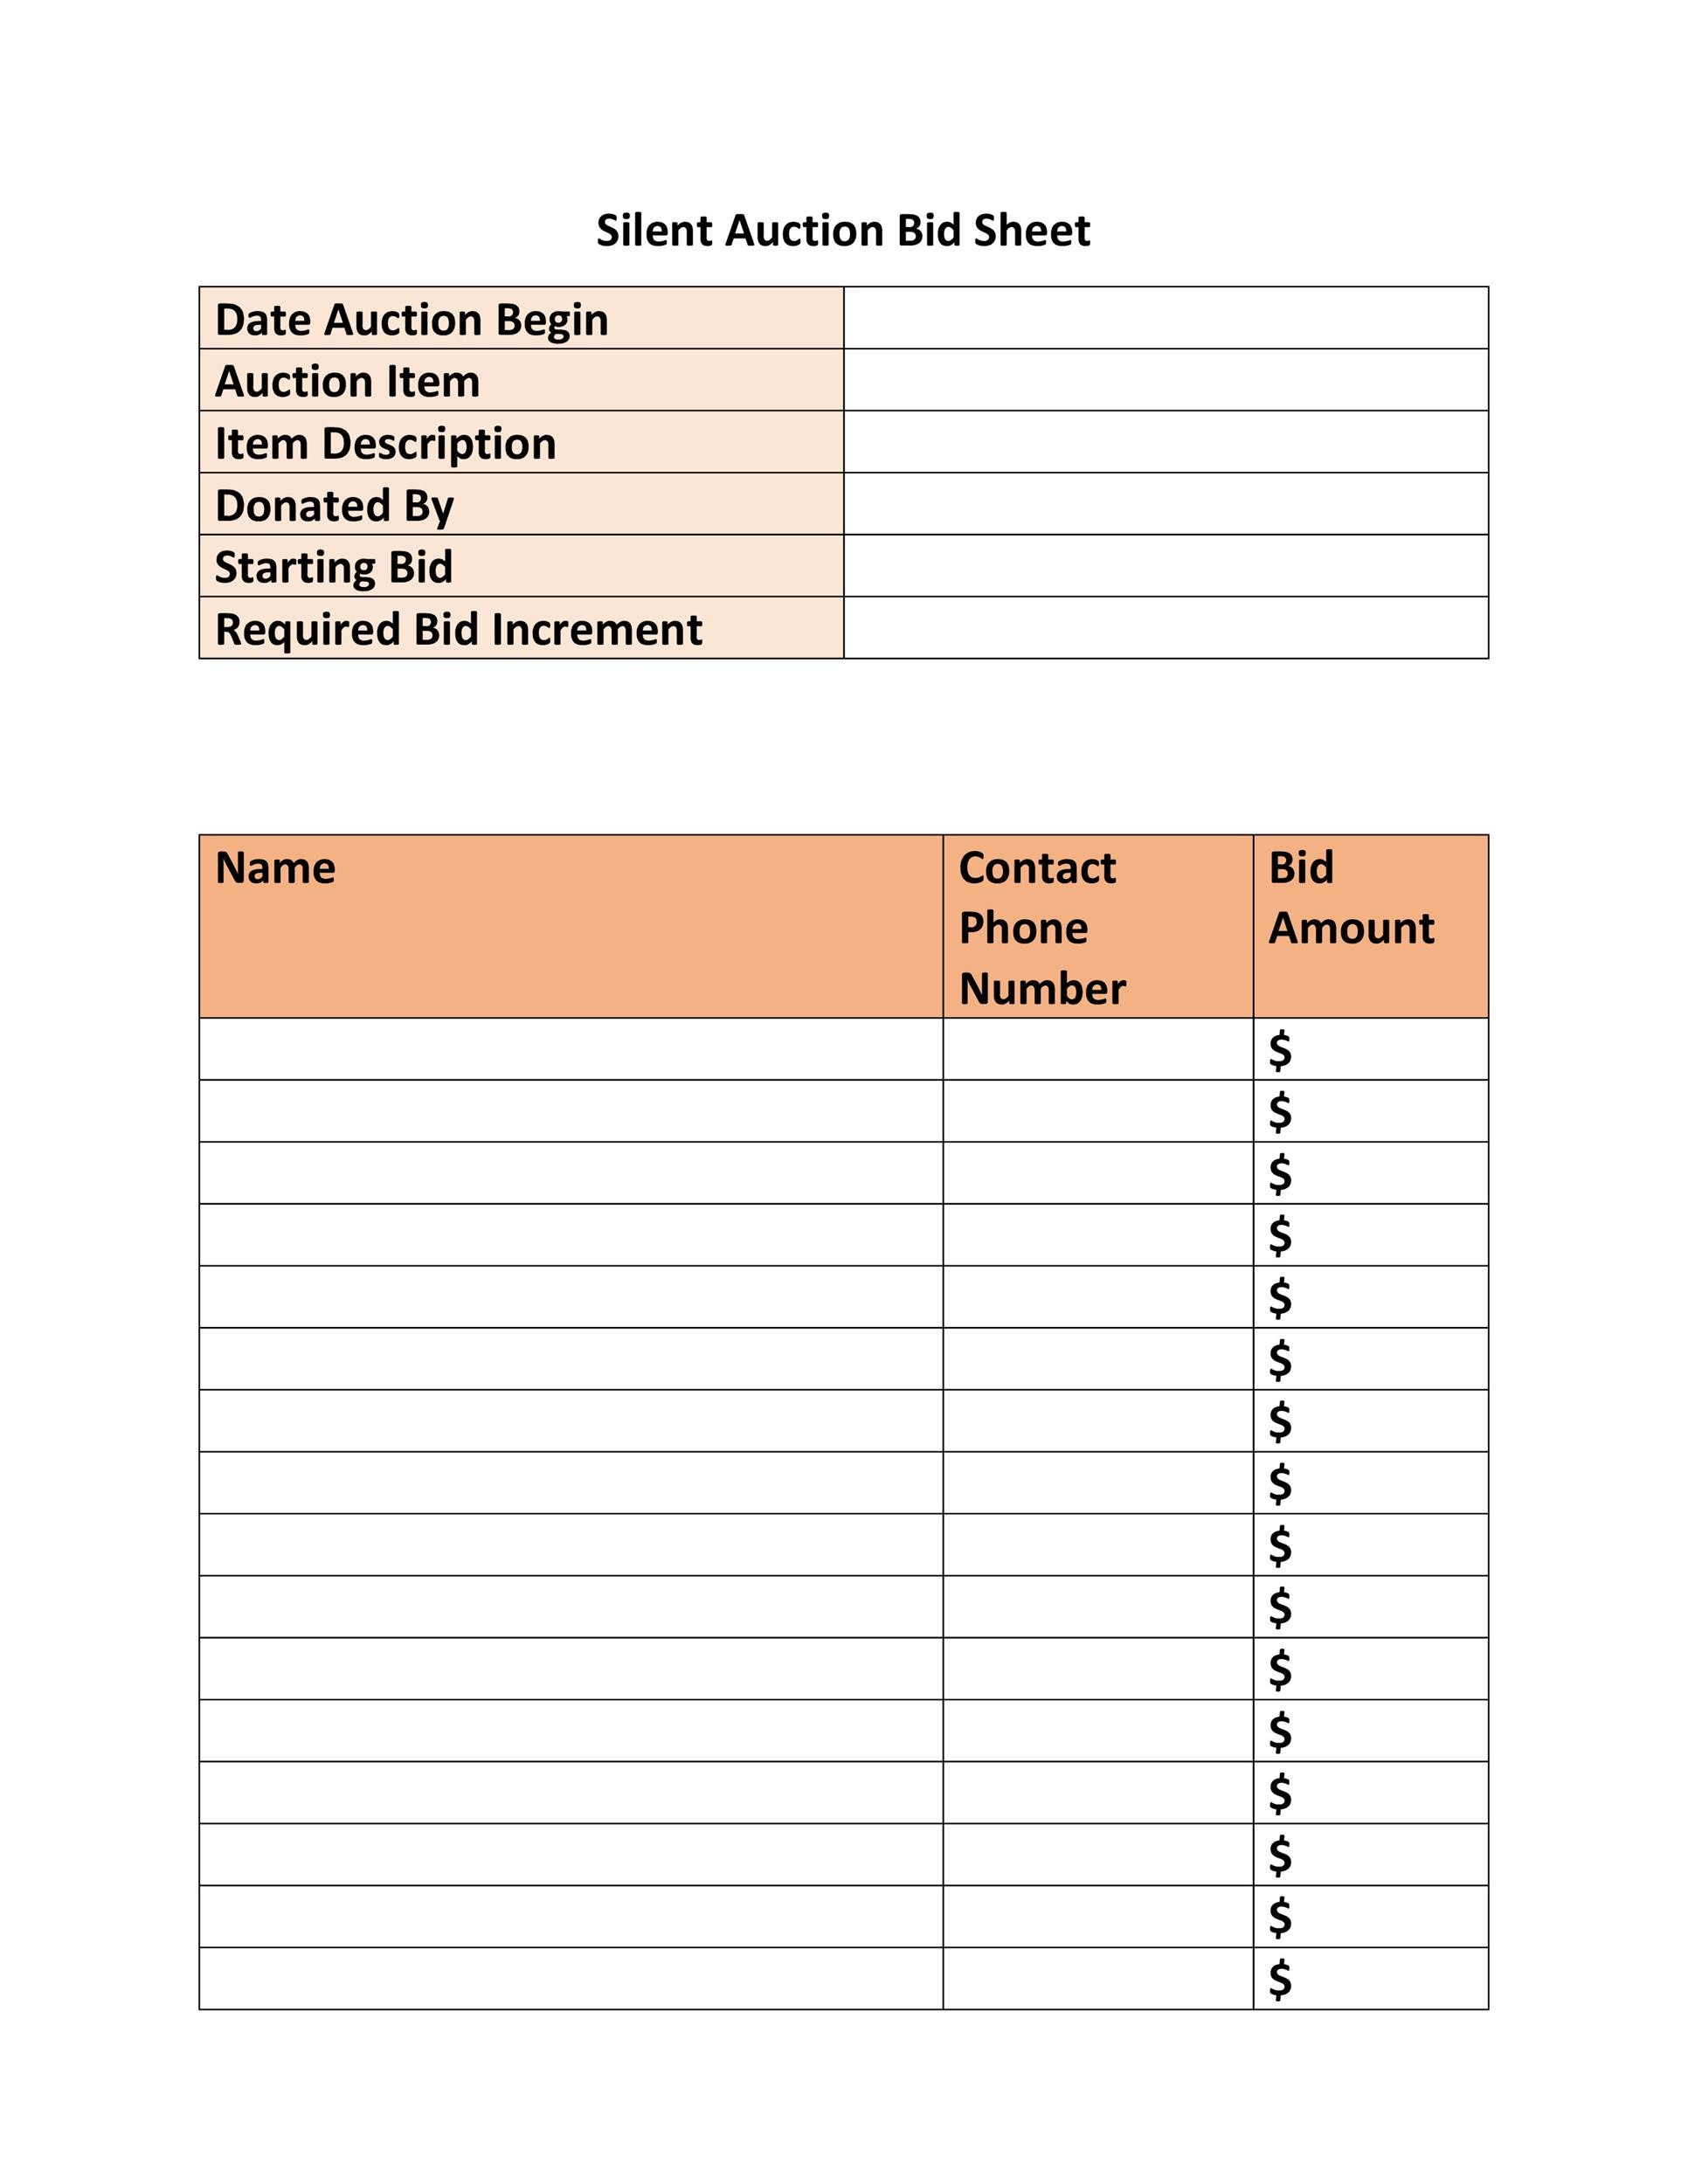 40  Silent Auction Bid Sheet Templates Word Excel ᐅ TemplateLab